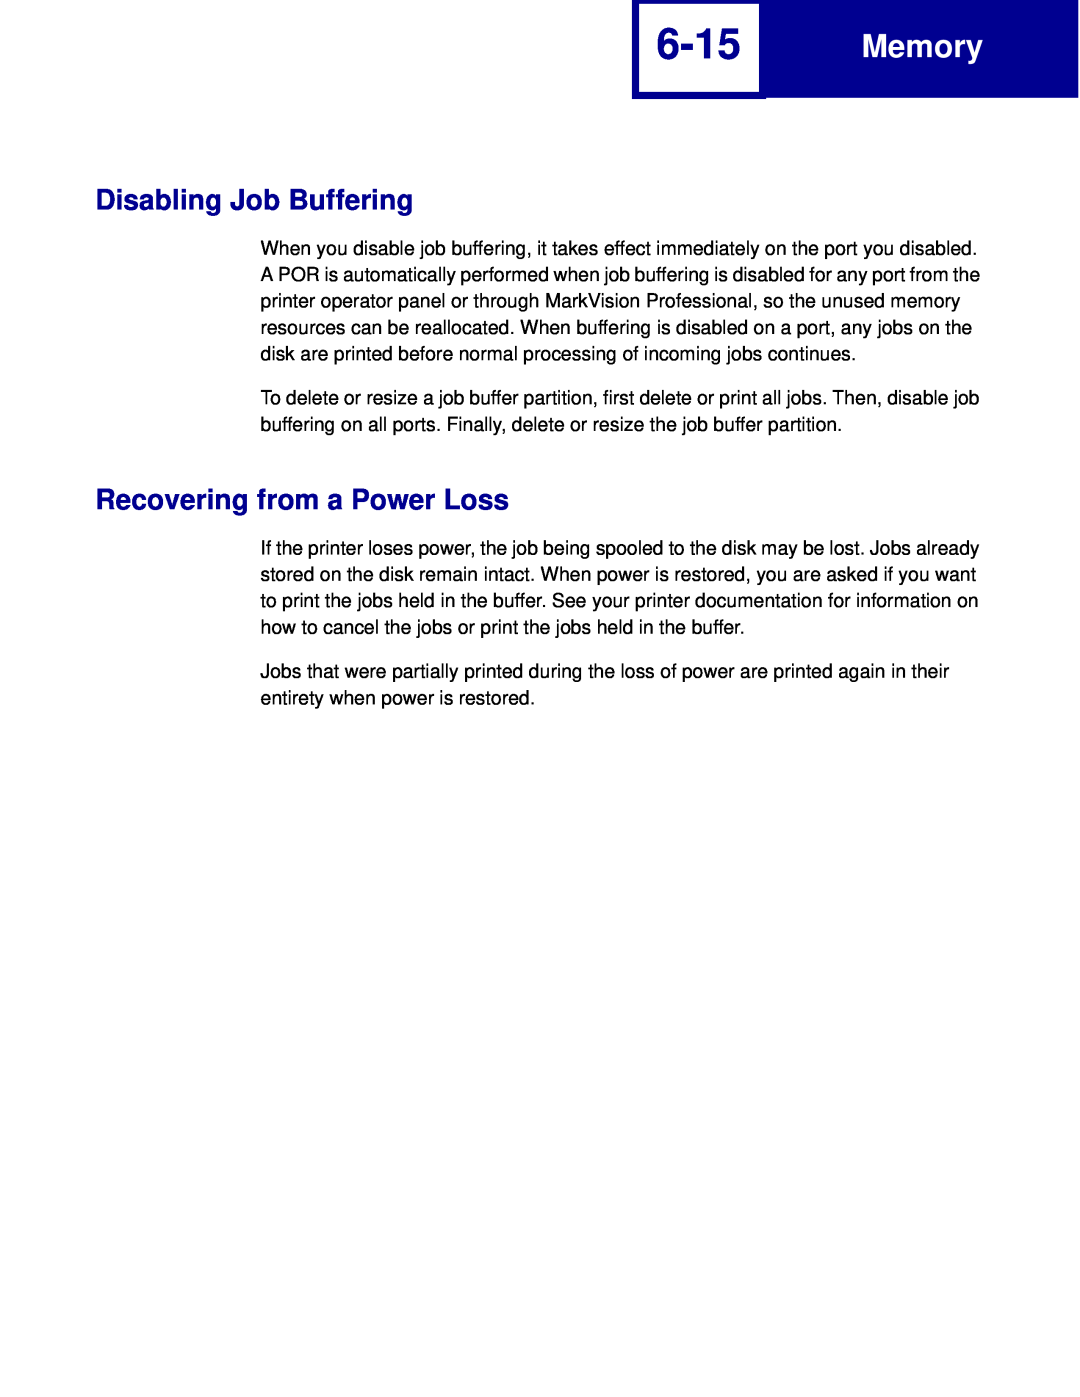 Lexmark C760, C762 manual 6-15, Disabling Job Buffering, Recovering from a Power Loss, Memory 